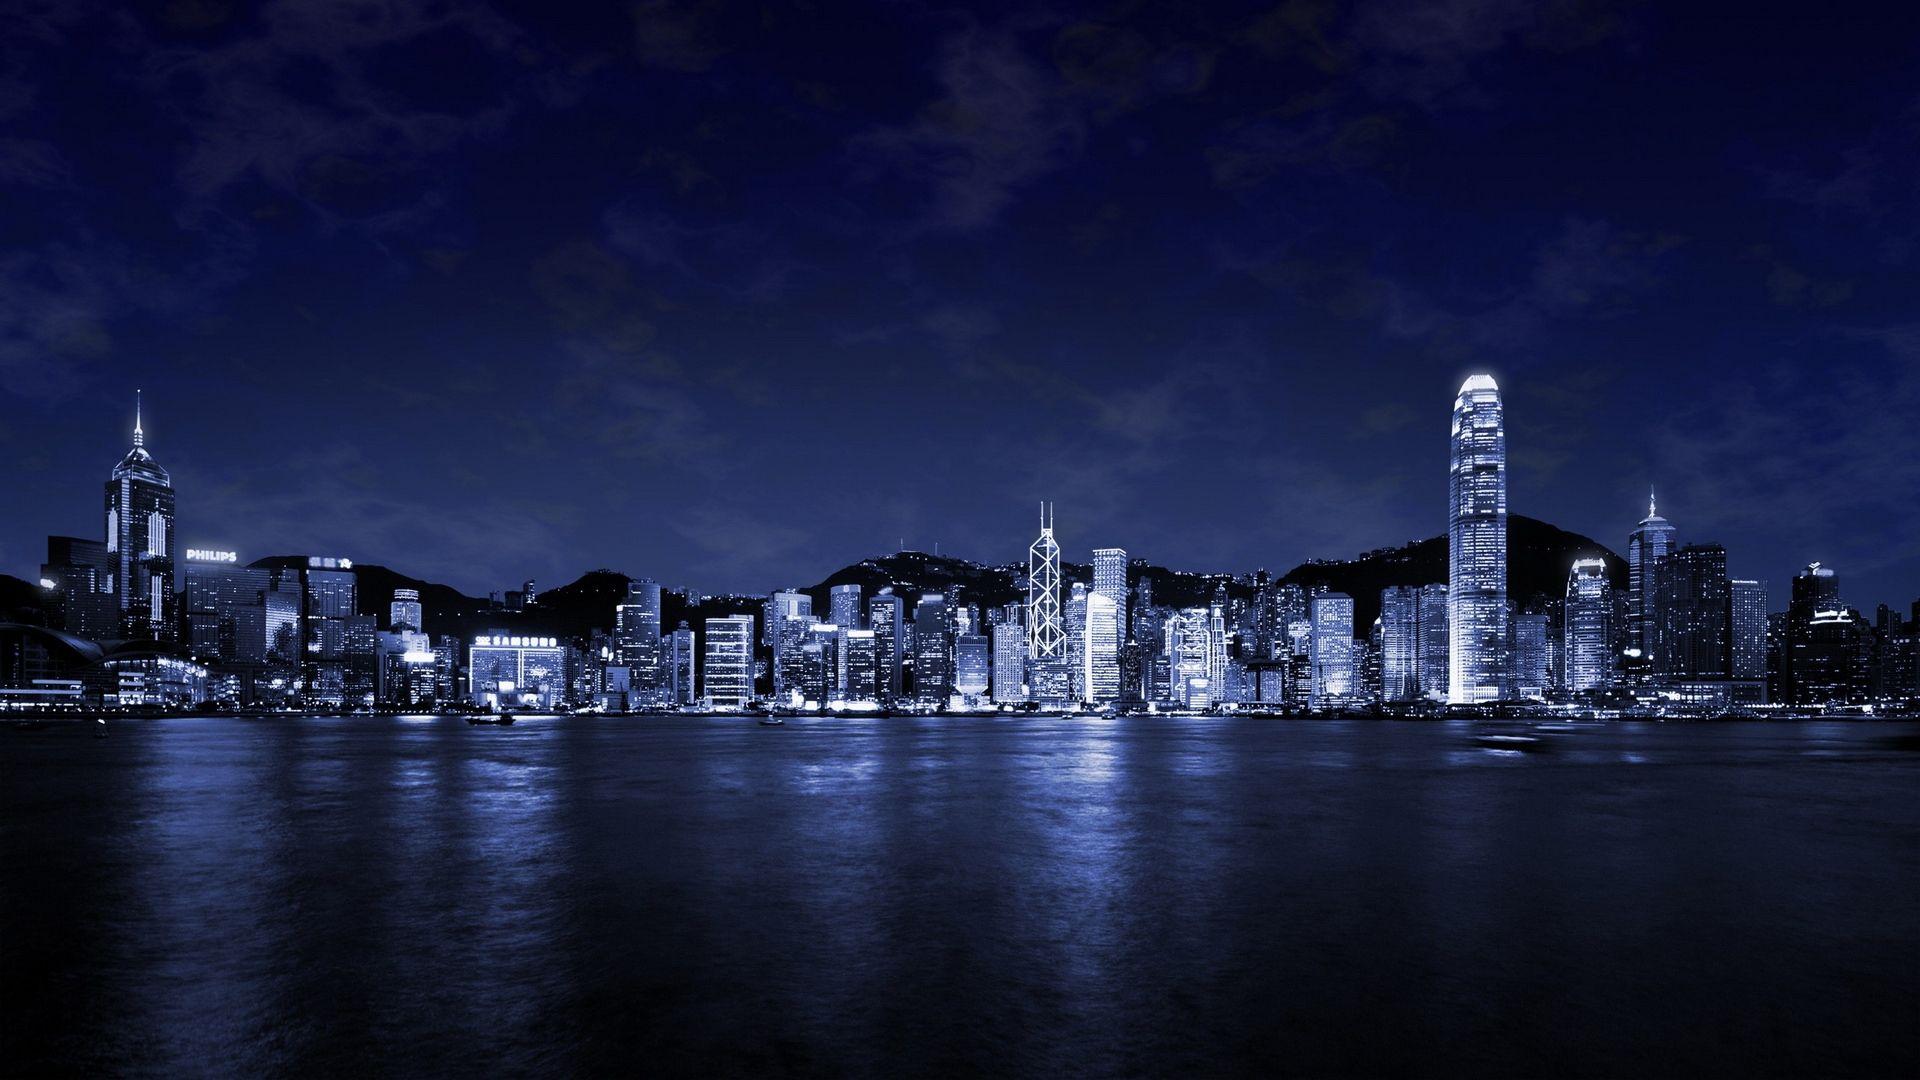 Night City Wallpaper Desktop Free Download. Night city, City